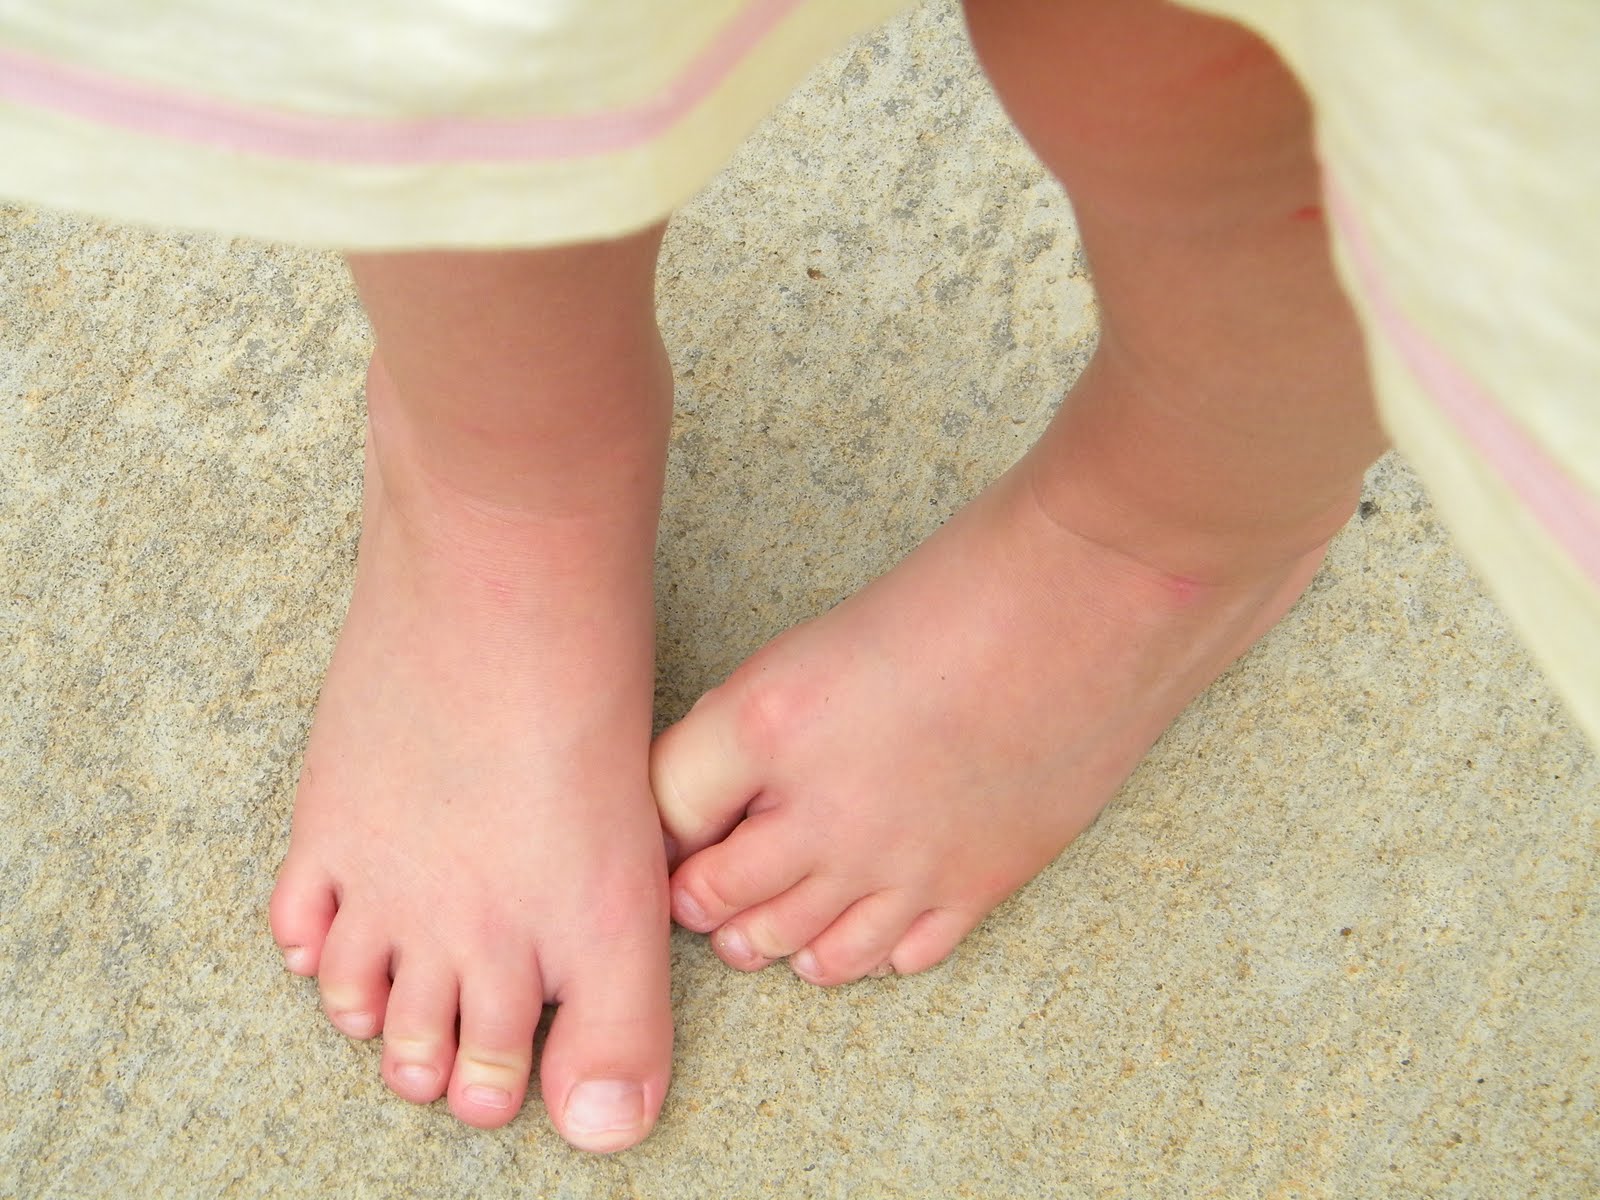 Детские feet. Маленькие feet. Детский тайфлас Феет. Детский foot feet. Kids Челленджер feet.